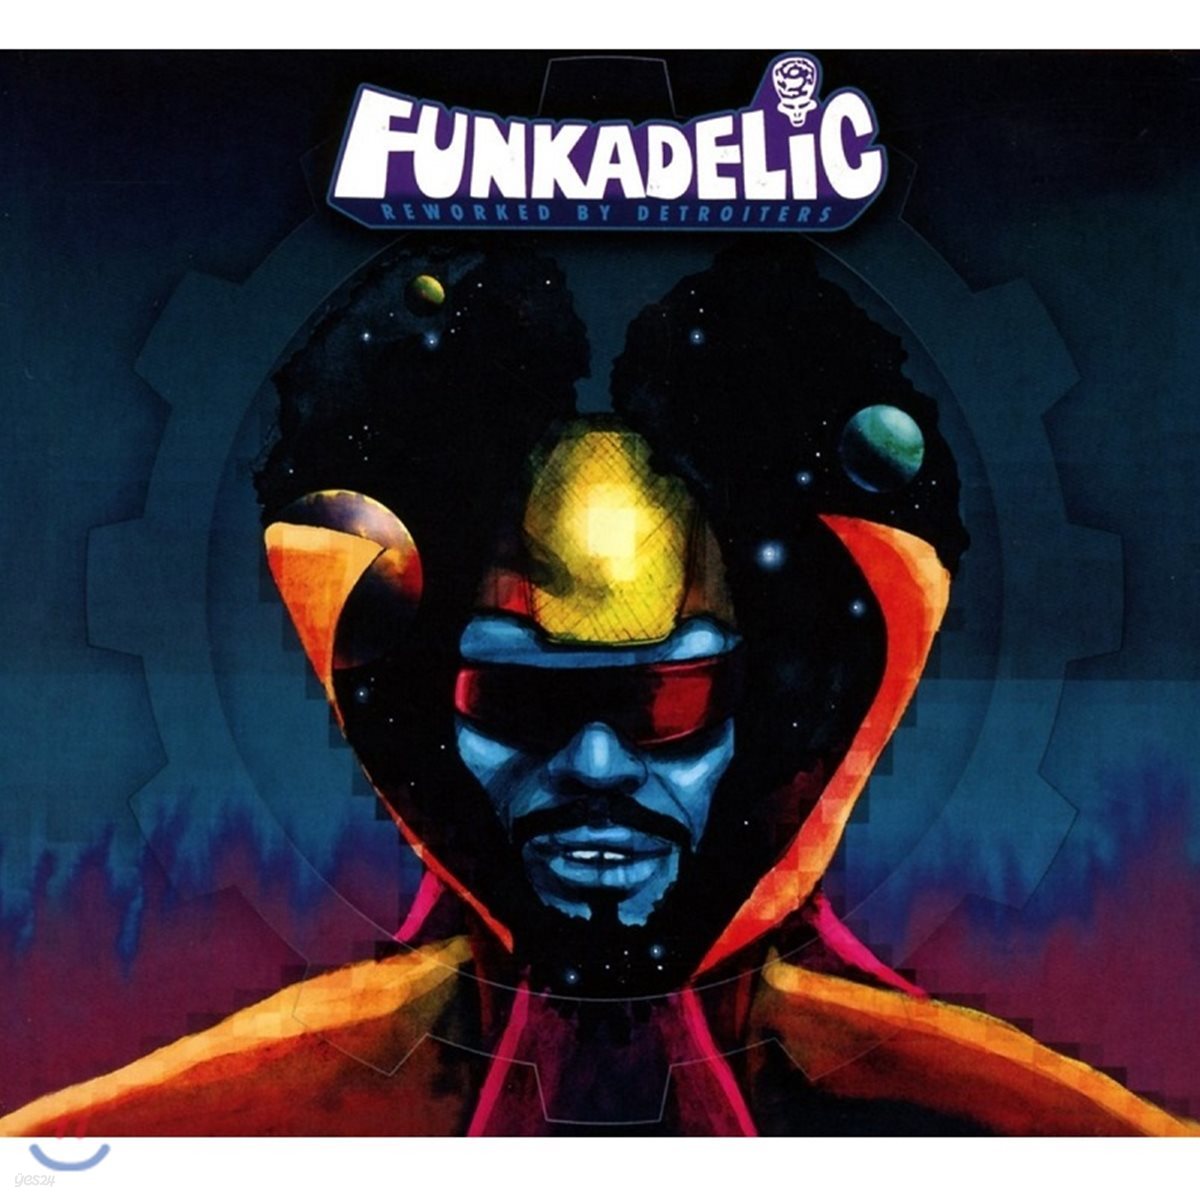 Funkadelic (펑카델릭) - Reworked By Detroiters